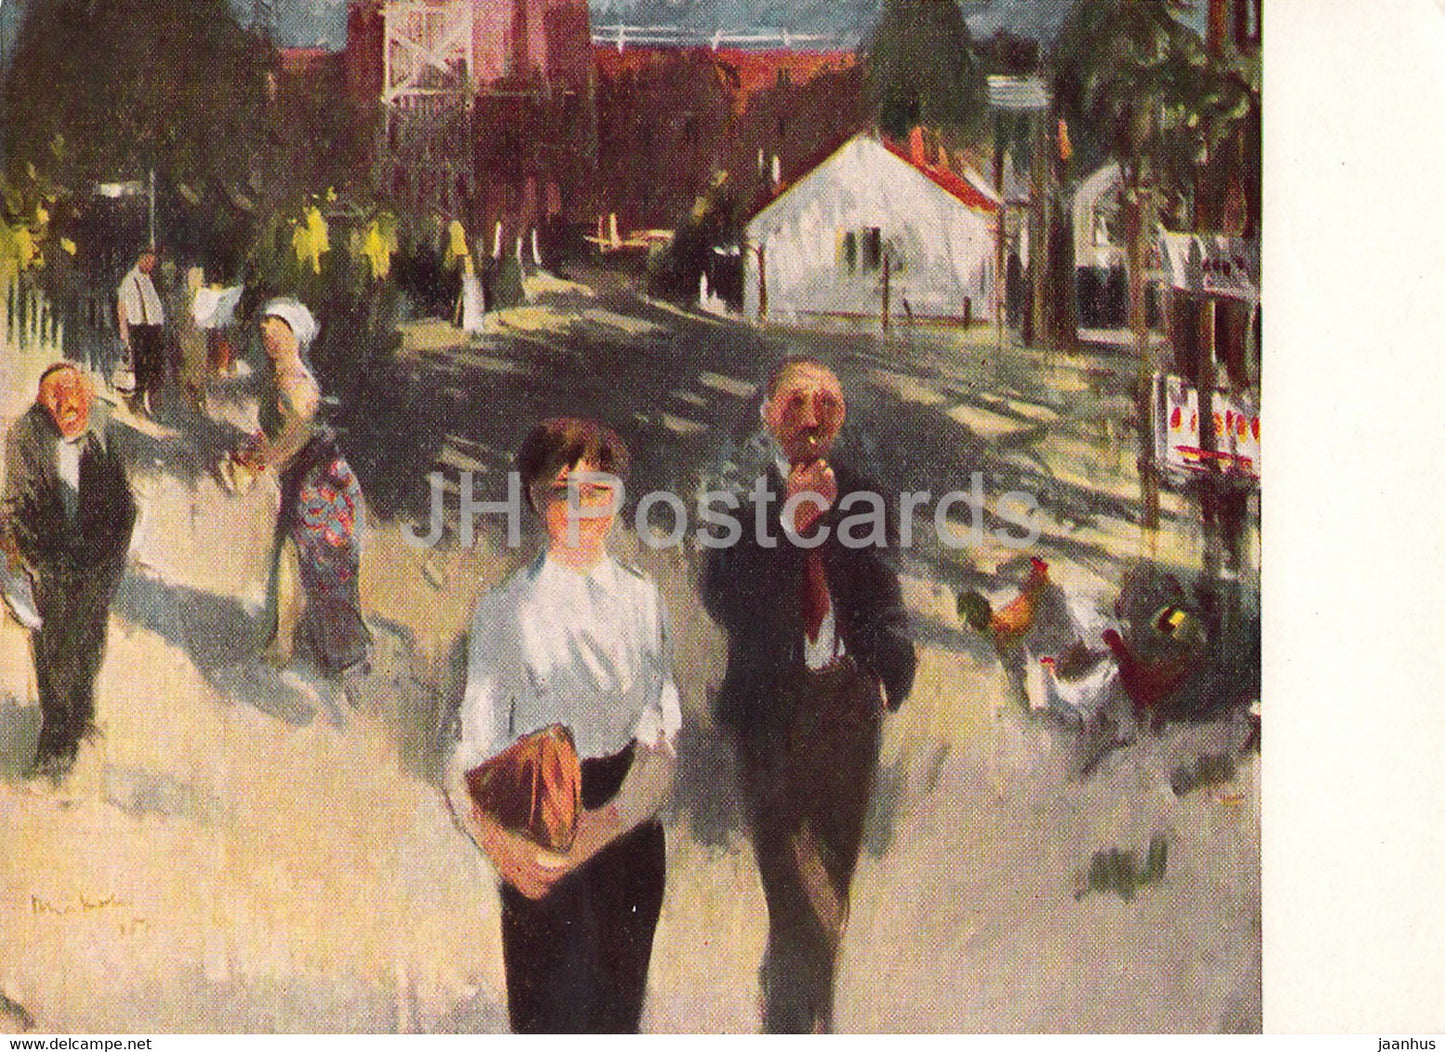 painting by L. Miskolci - Morning at Stalinvaros (Dunaujvaros) - 1 - Hungarian art - 1959 - Russia USSR - unused - JH Postcards